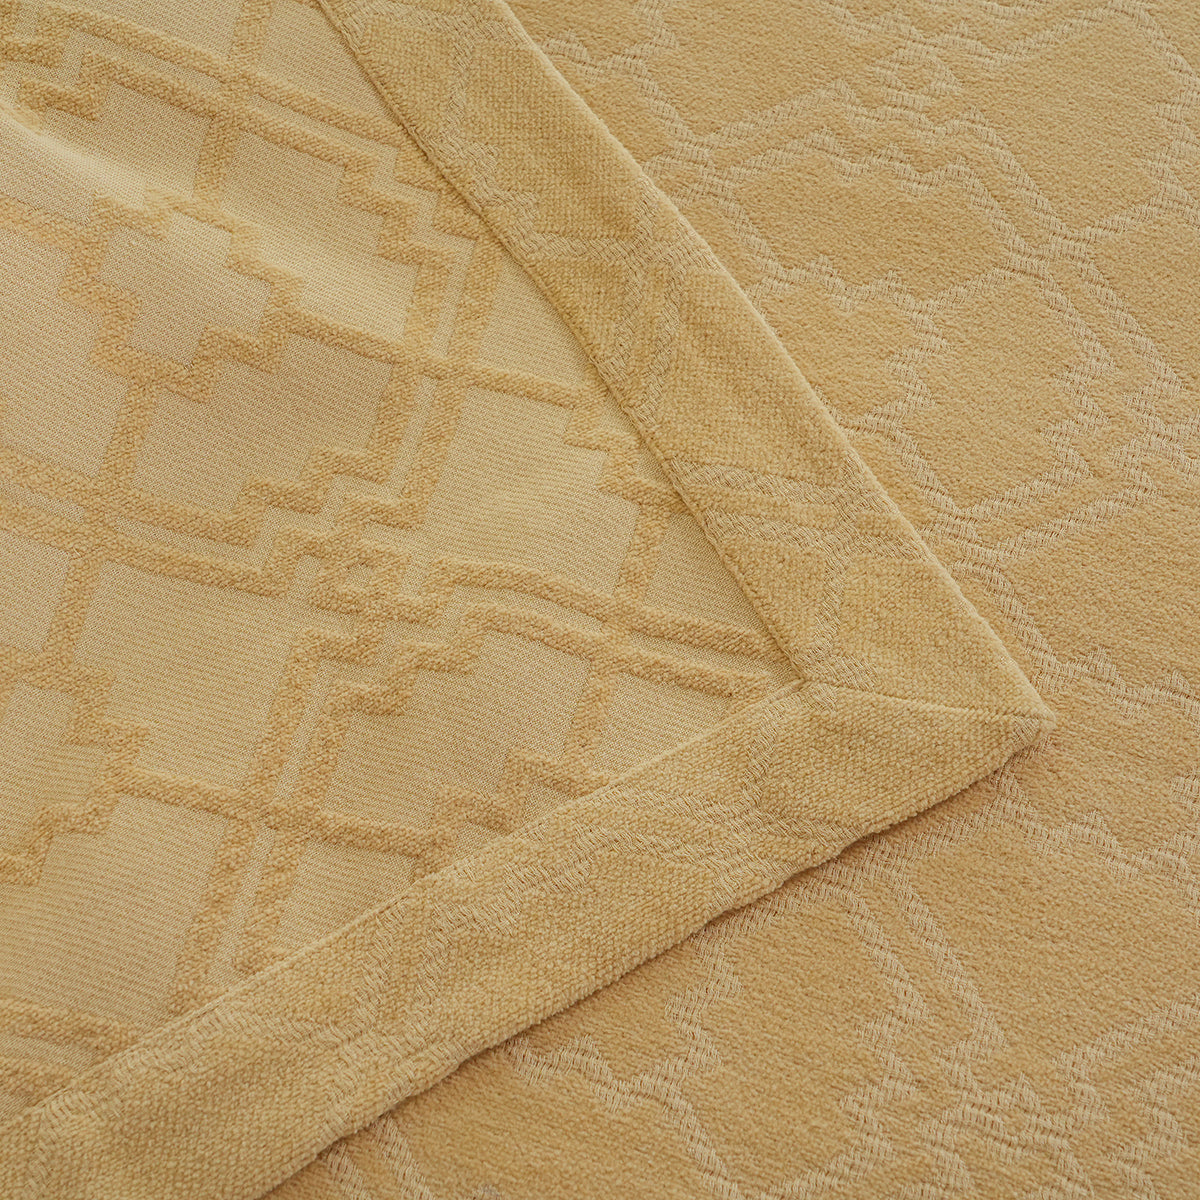 Utopian Regan Geometric Frills Soft 100% Cotton Bed Cover